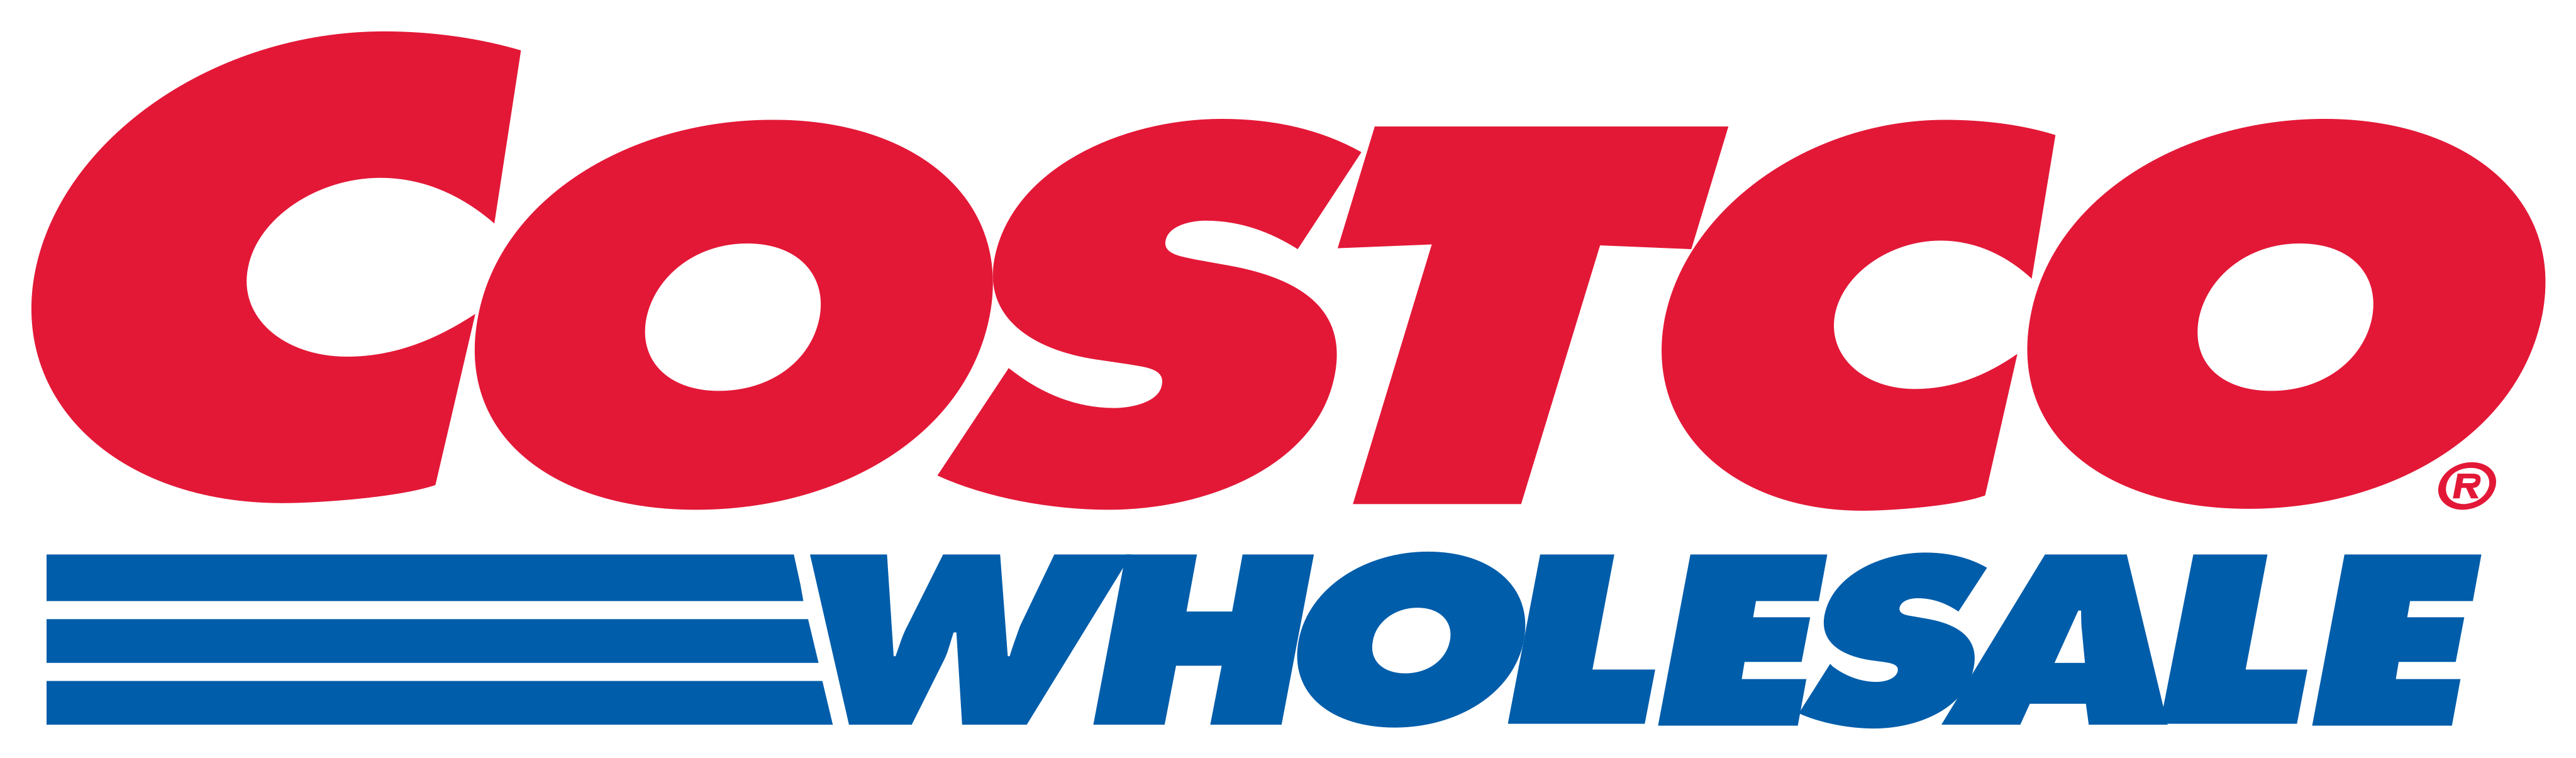 Costco Wholesale Logo.